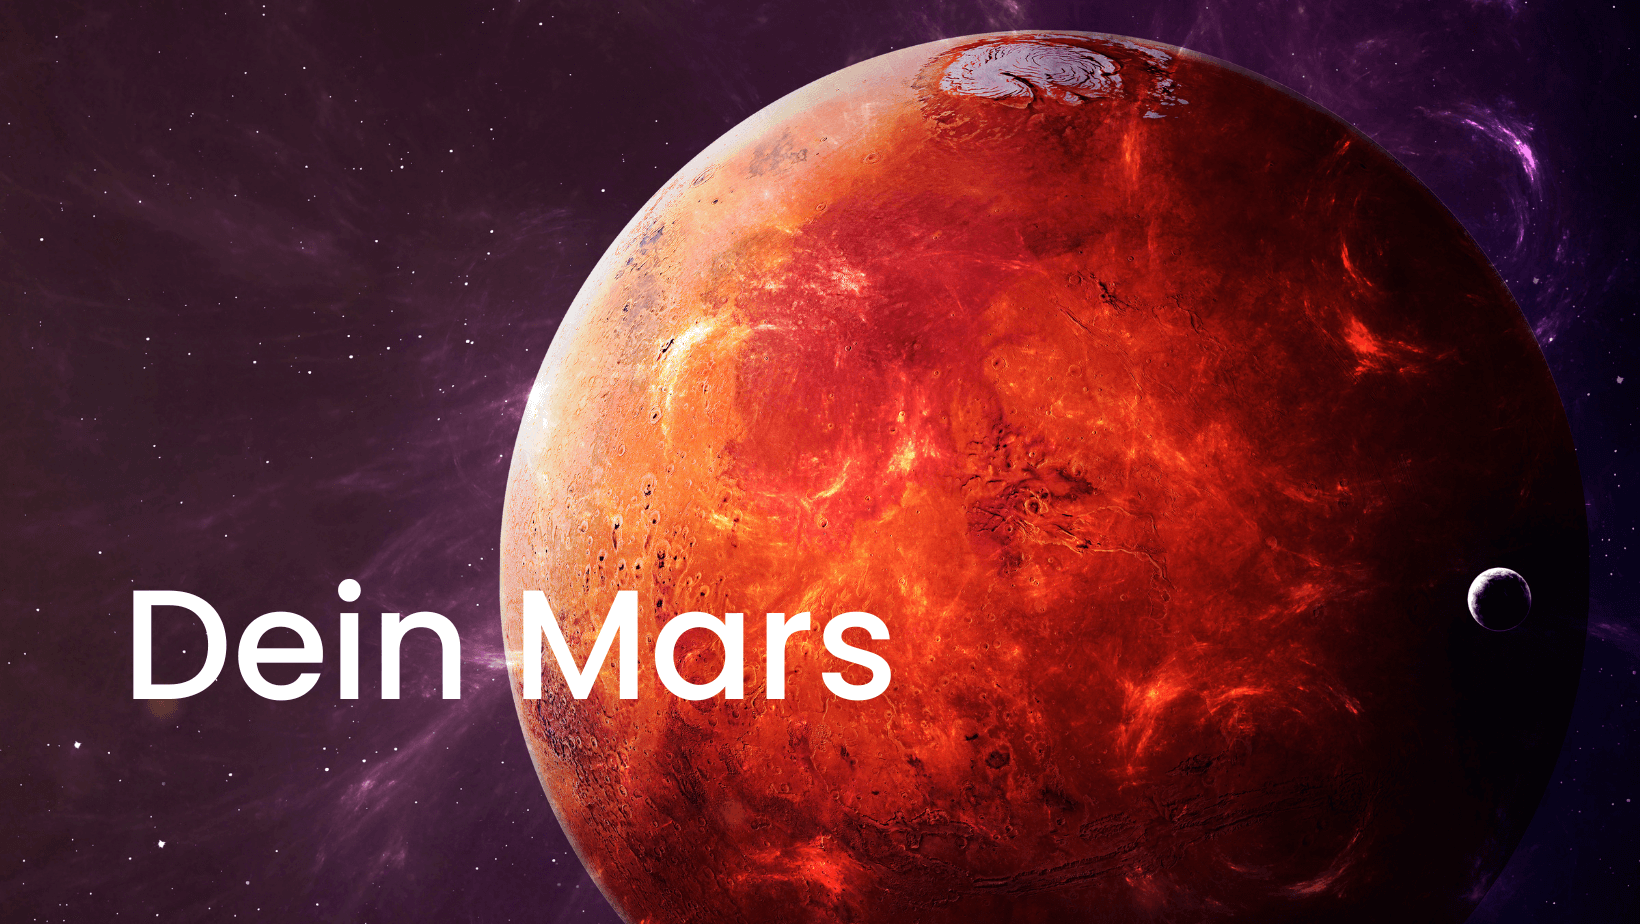 feuriger Planet Mars